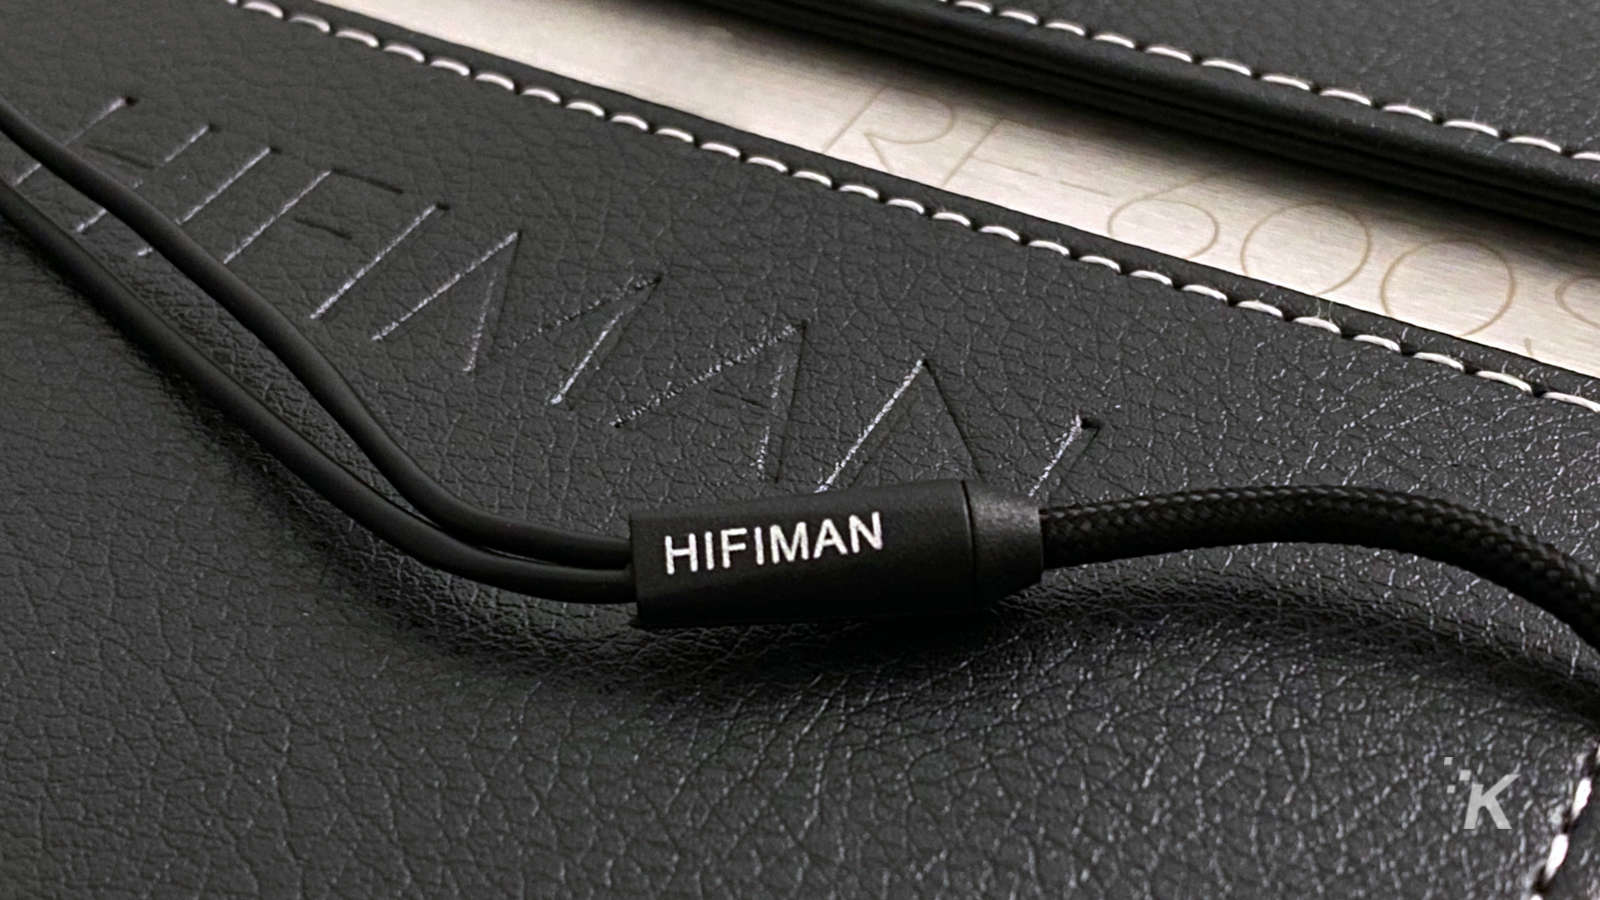 hifiman logo on headphone cord